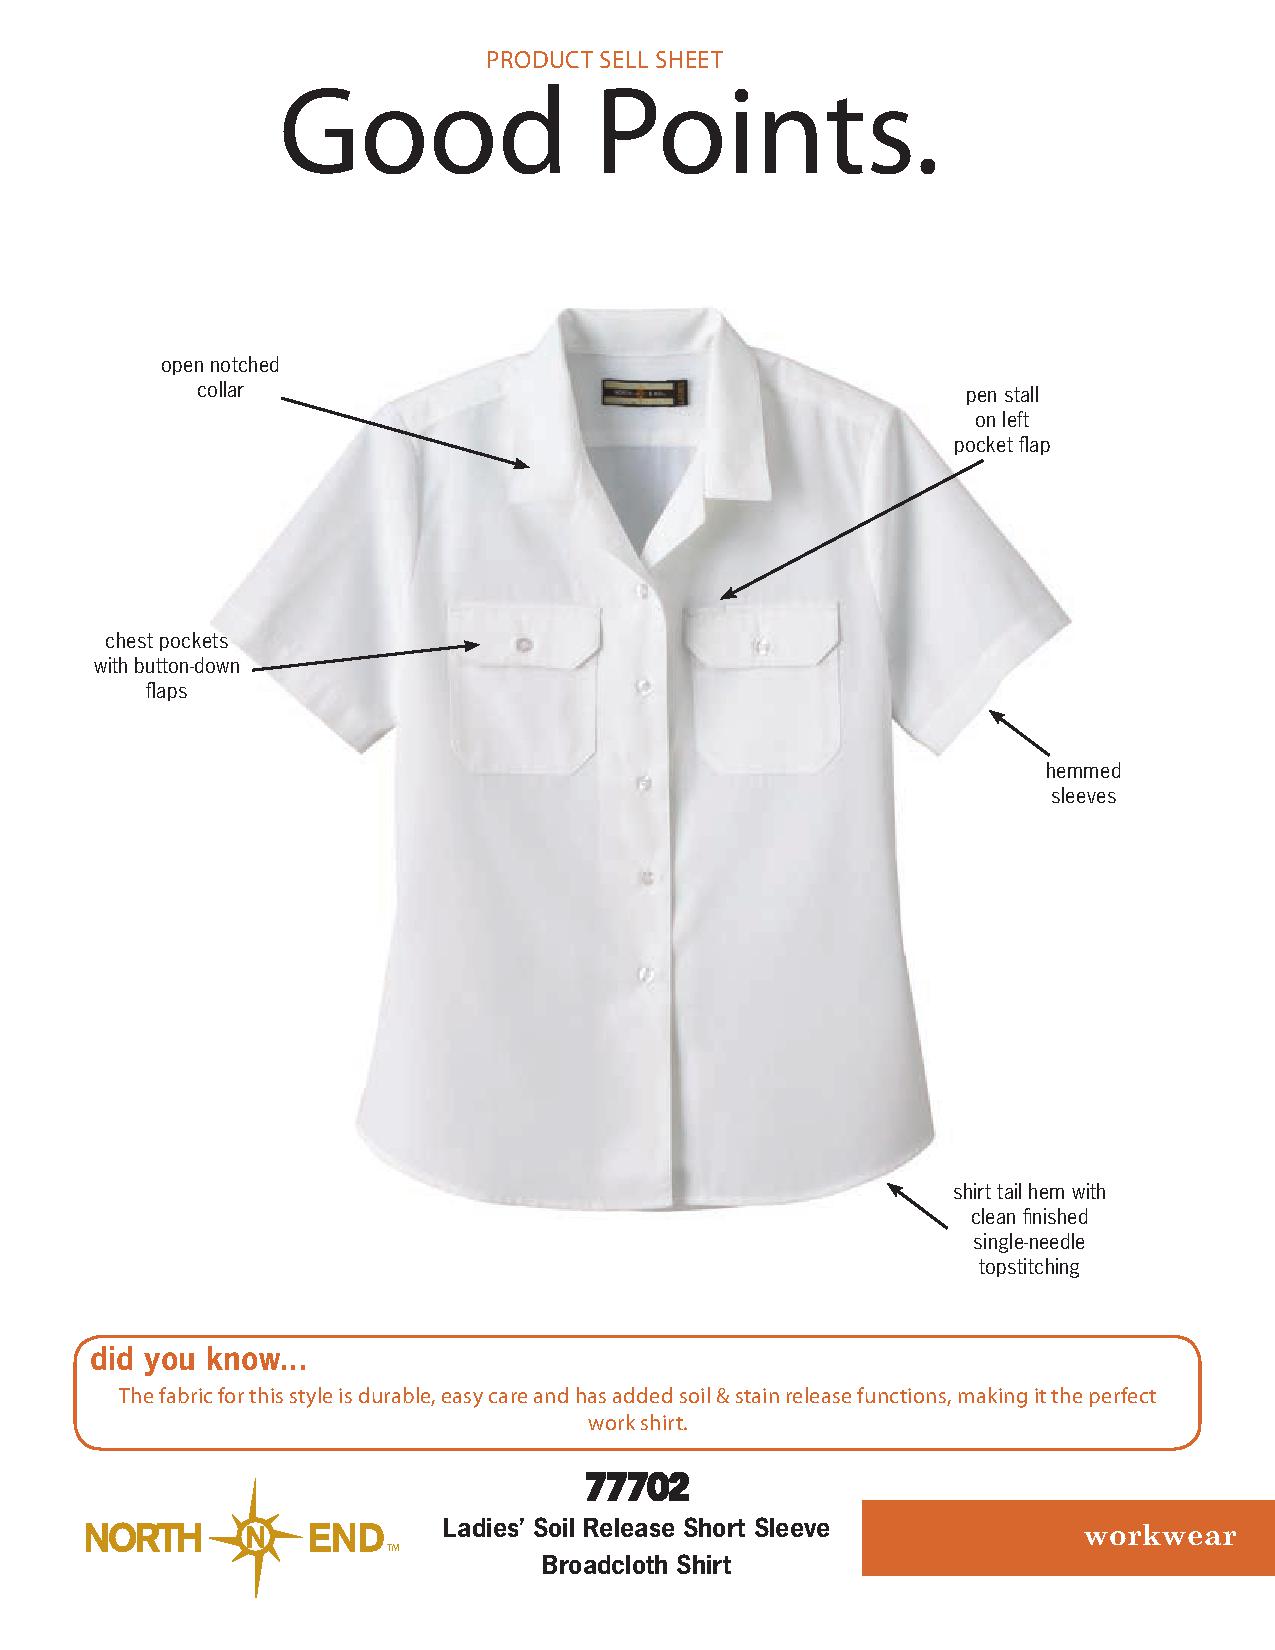 Ash City Uniform Shirts 77702 - Ladies' Soil Release Short Sleeve Broadcloth Shirt